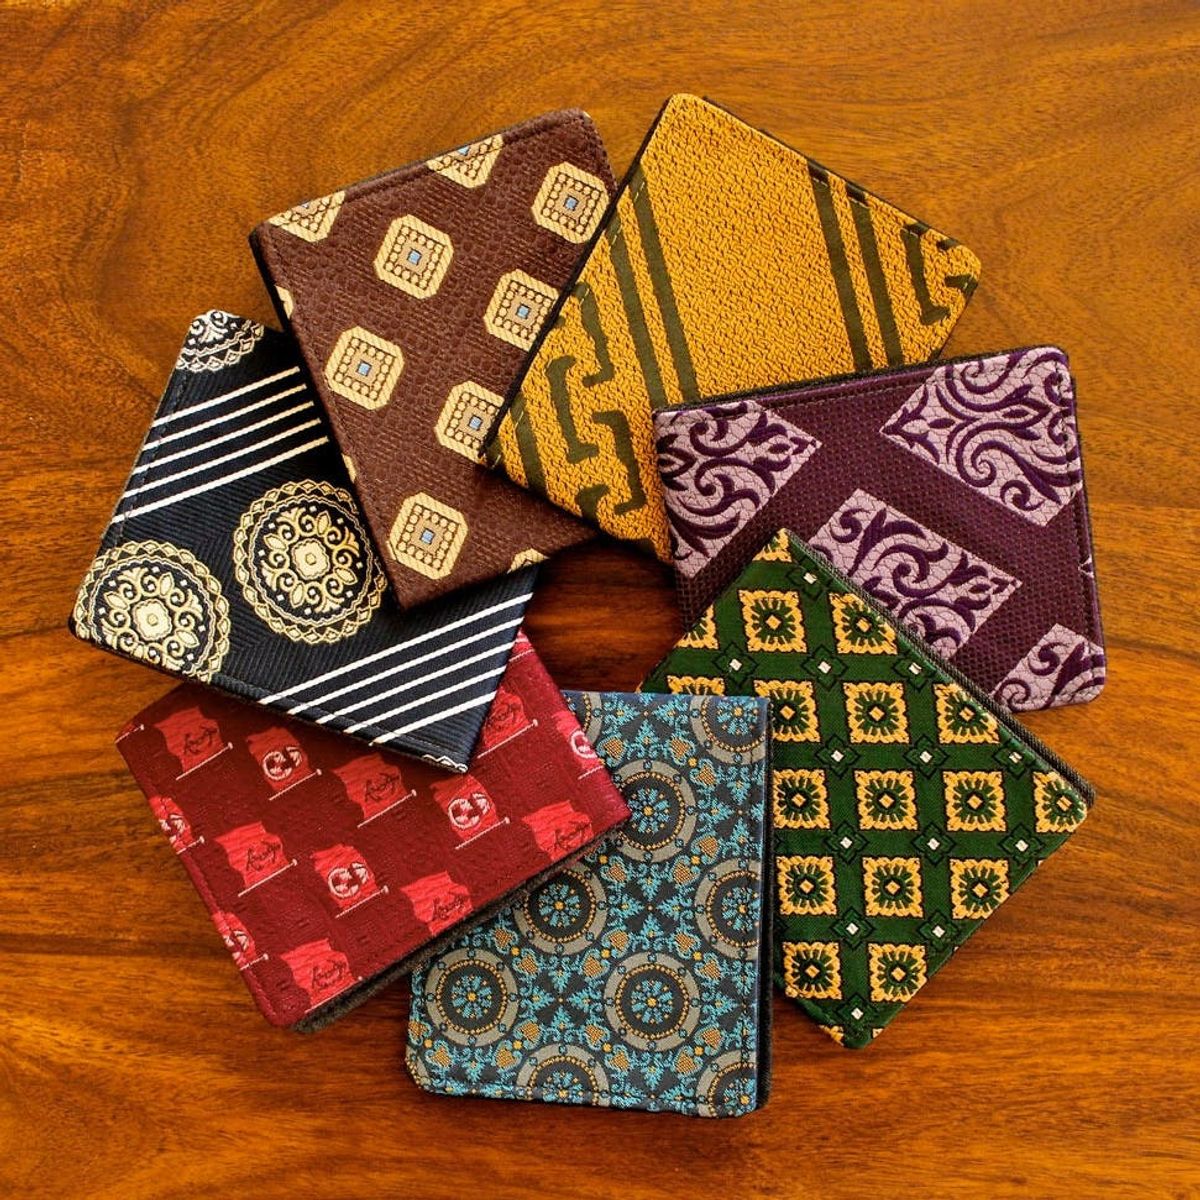 Guy Gift Alert! Dapper Wallets From Discarded Fabrics & Neckties